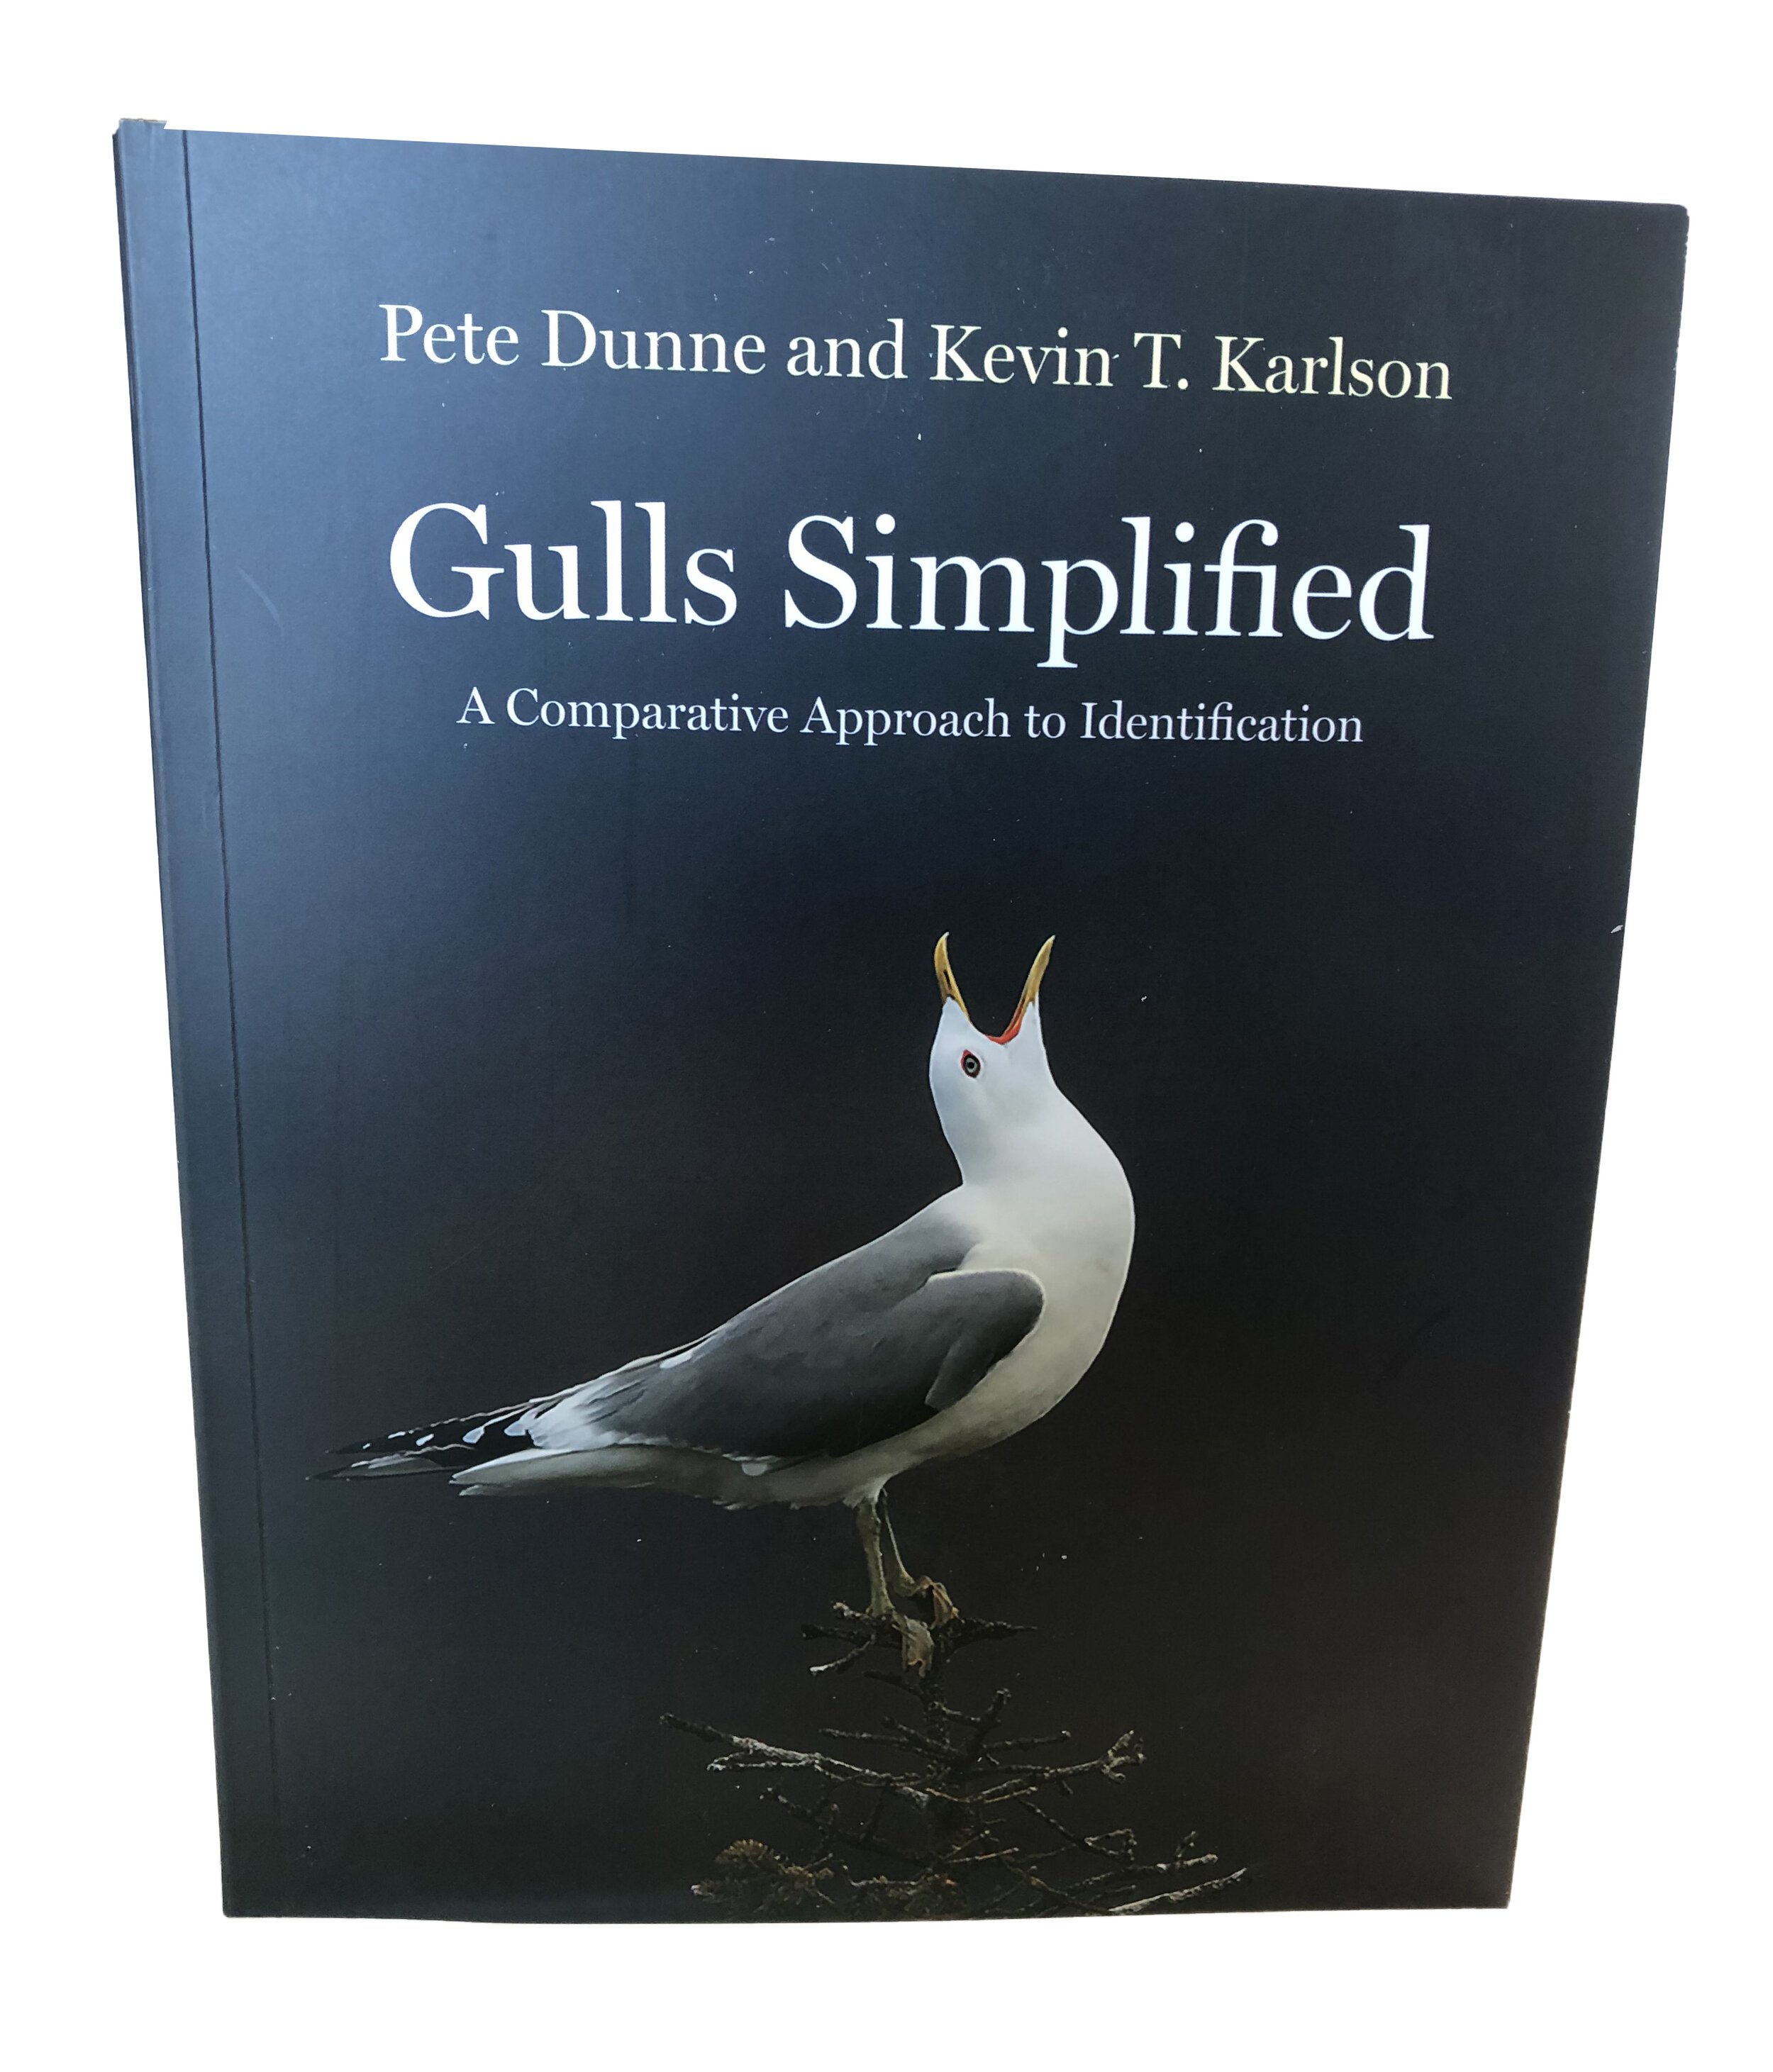 Gulls Simplified - $24.95